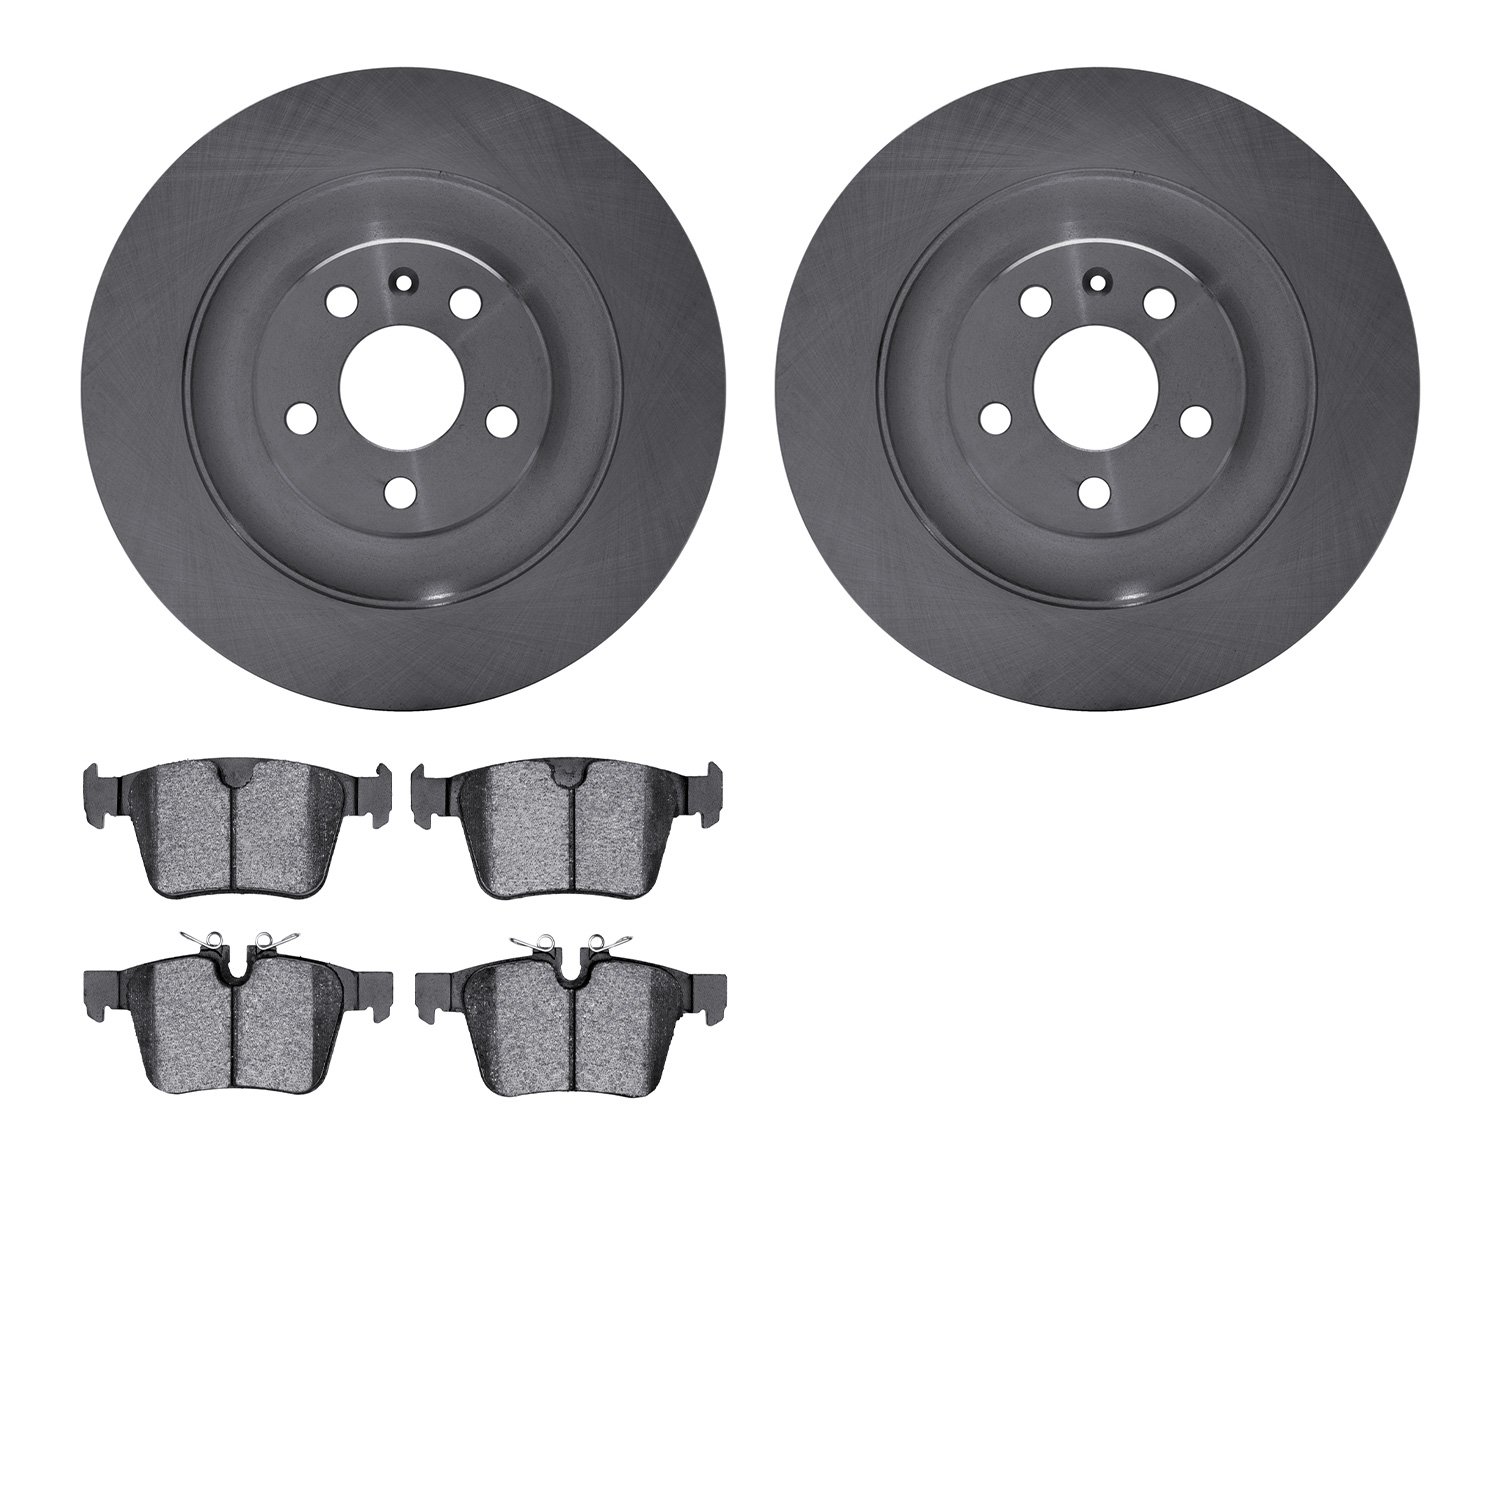 6302-27073 Brake Rotors with 3000-Series Ceramic Brake Pads Kit, Fits Select Multiple Makes/Models, Position: Rear